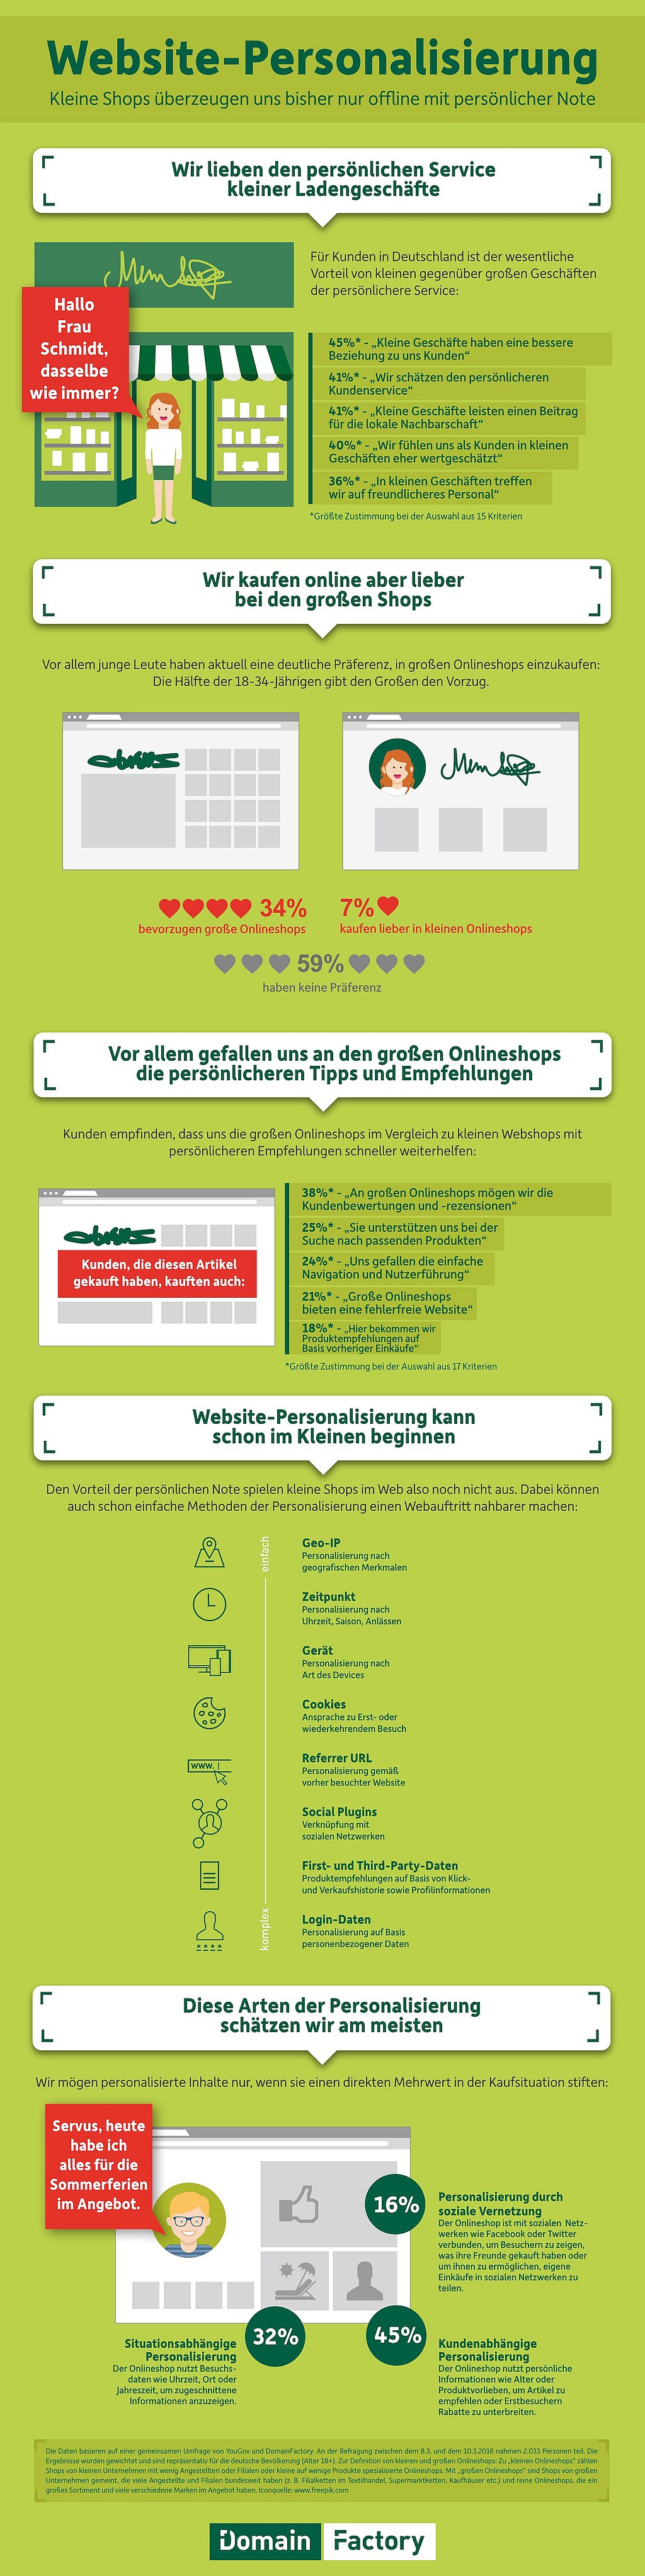 infografik domainfactory personalisierung onlineshop